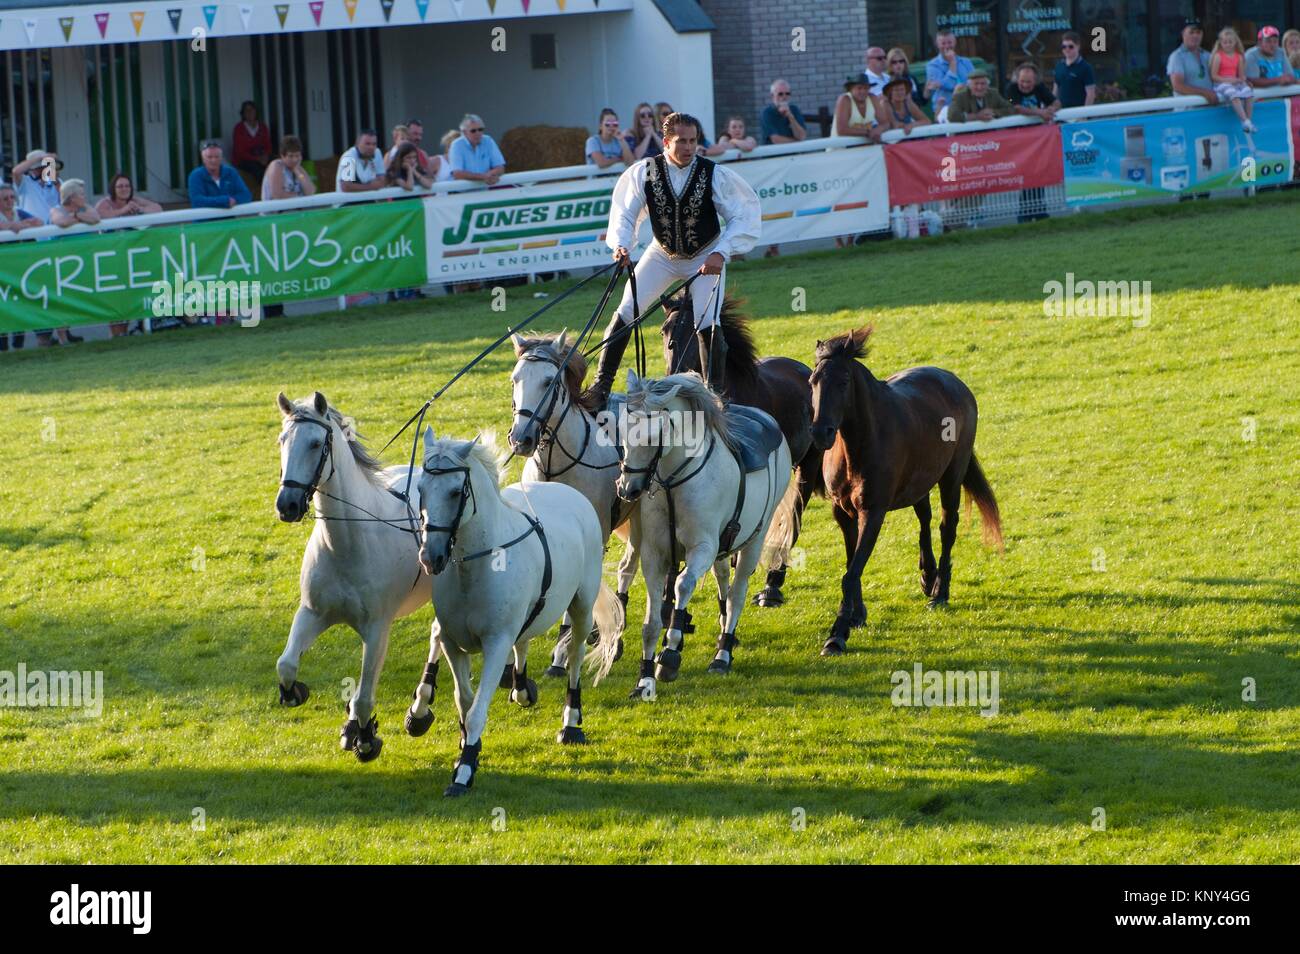 Lorenzo Horse Show au Royal Welsh Show, Llanelwedd, Powys, Wales, UK. Banque D'Images